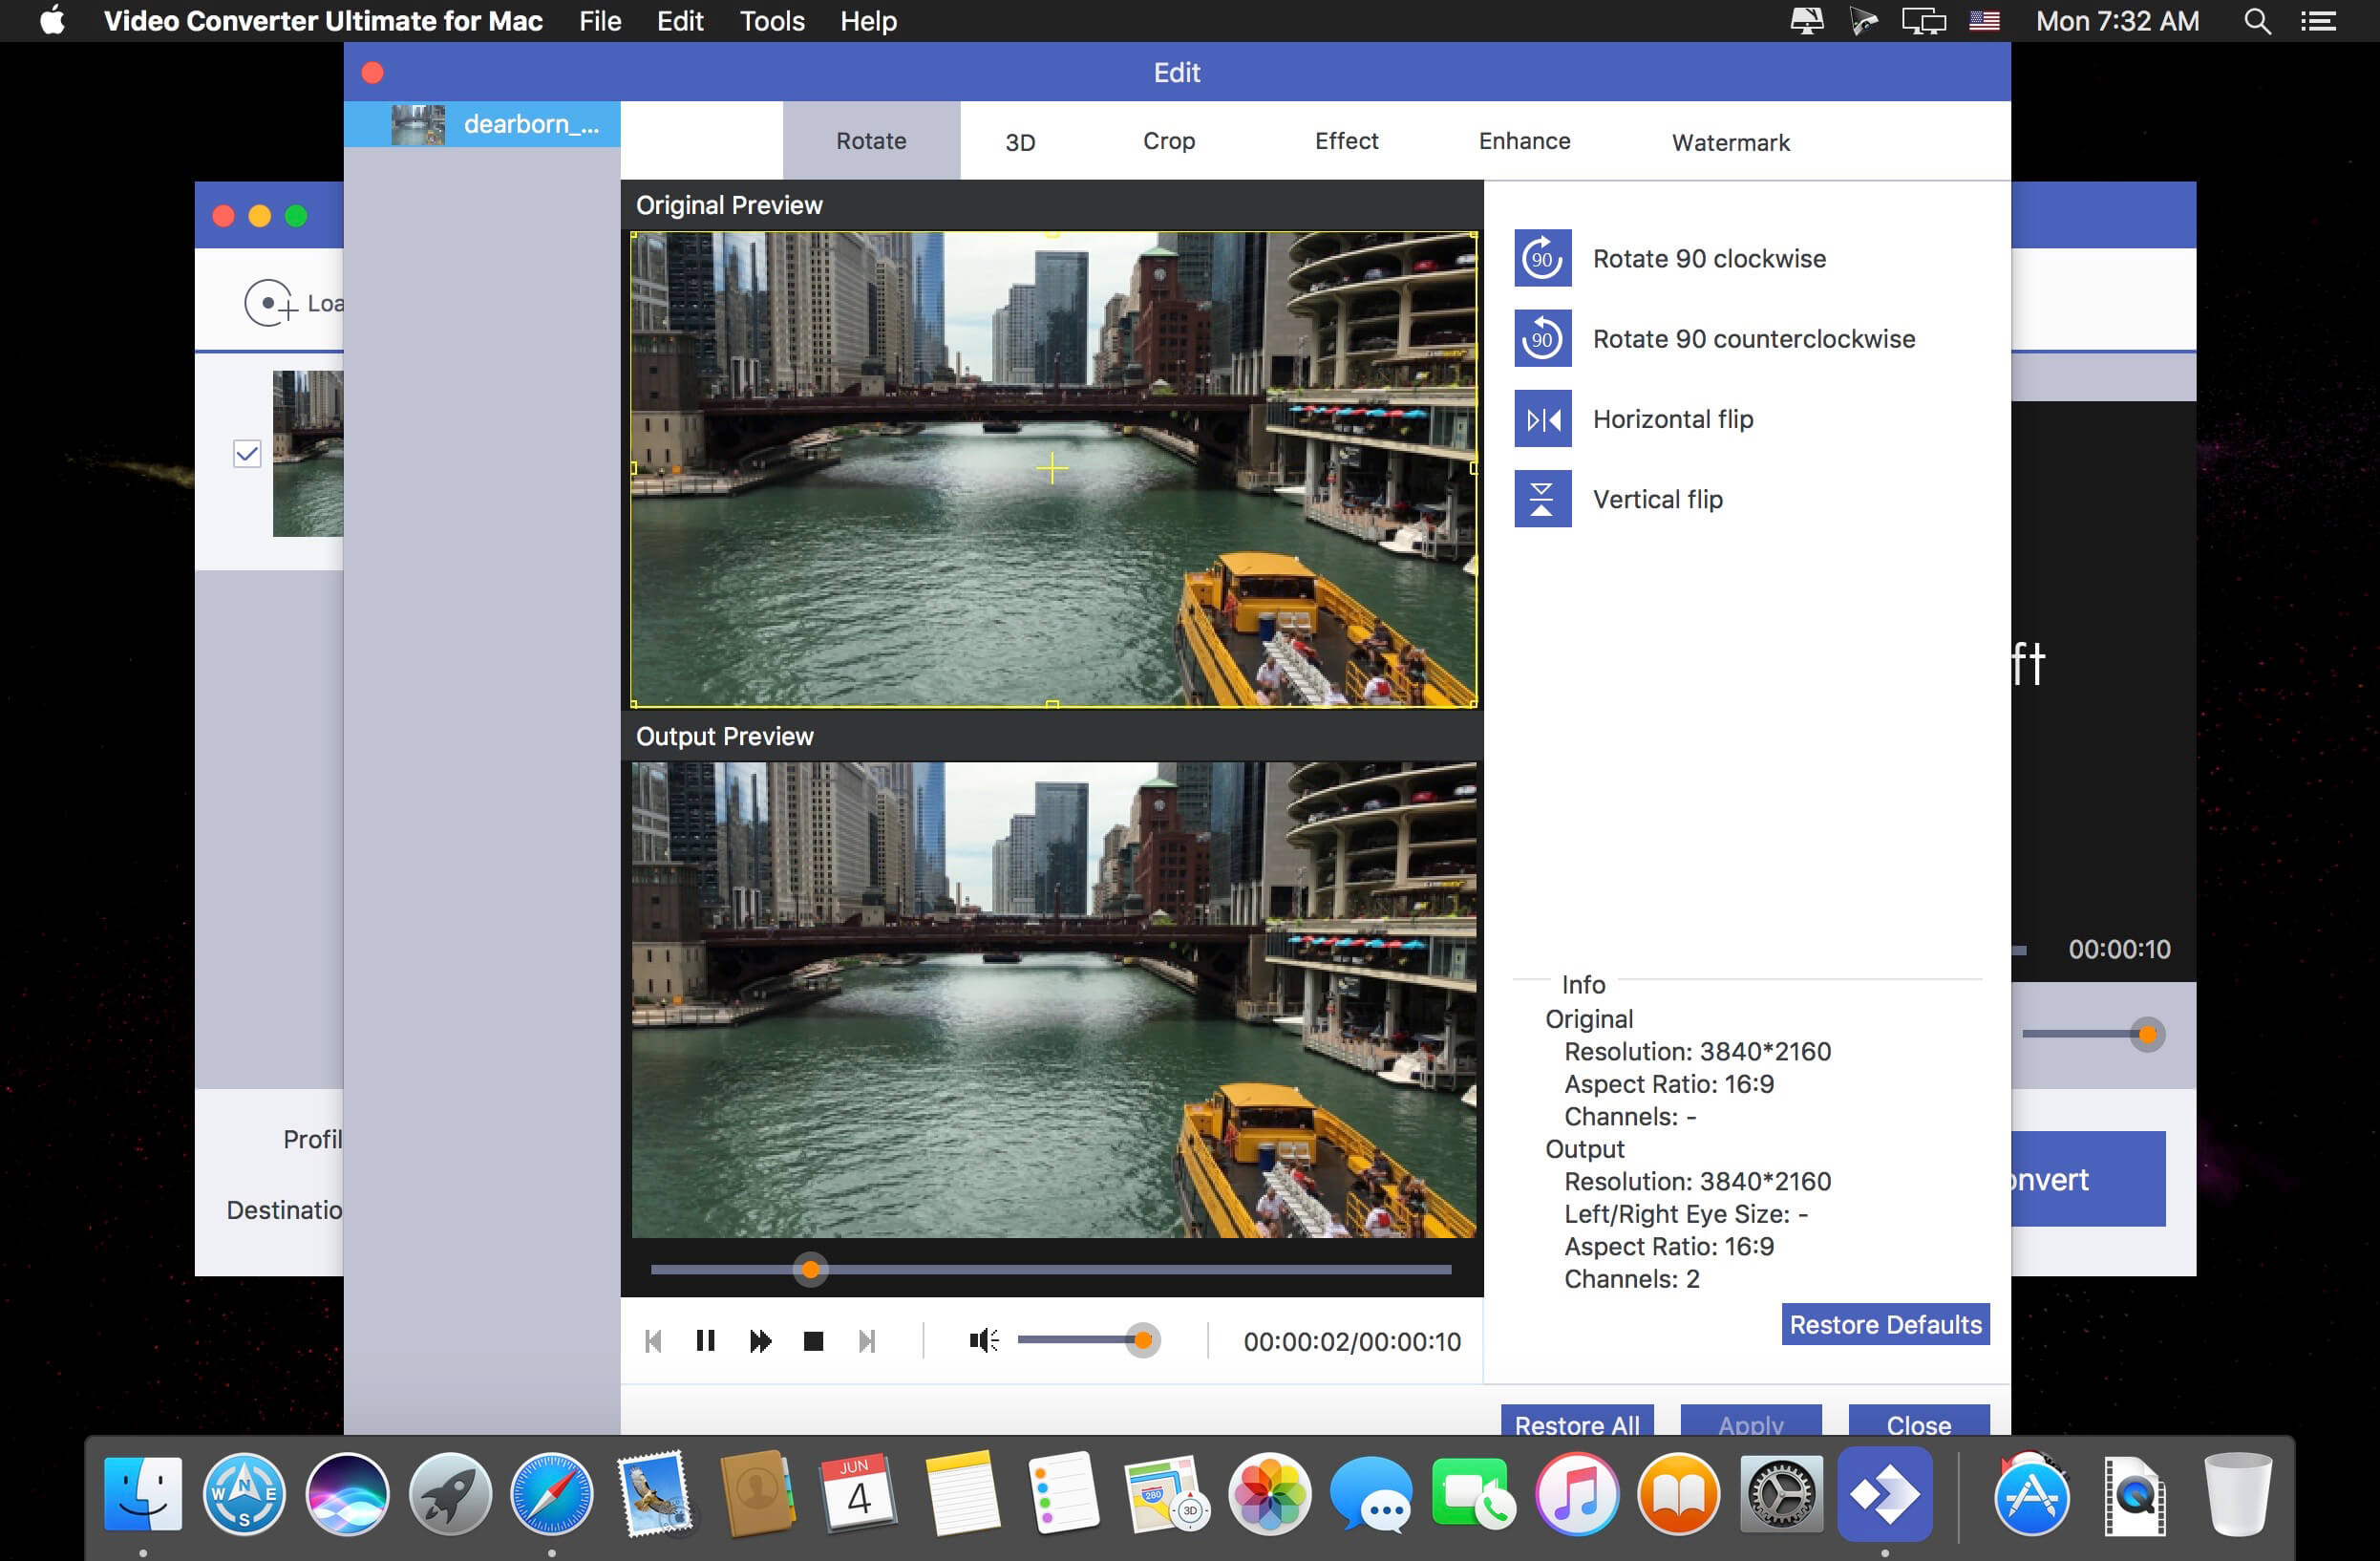 wondershare video converter ultimate mac torrent